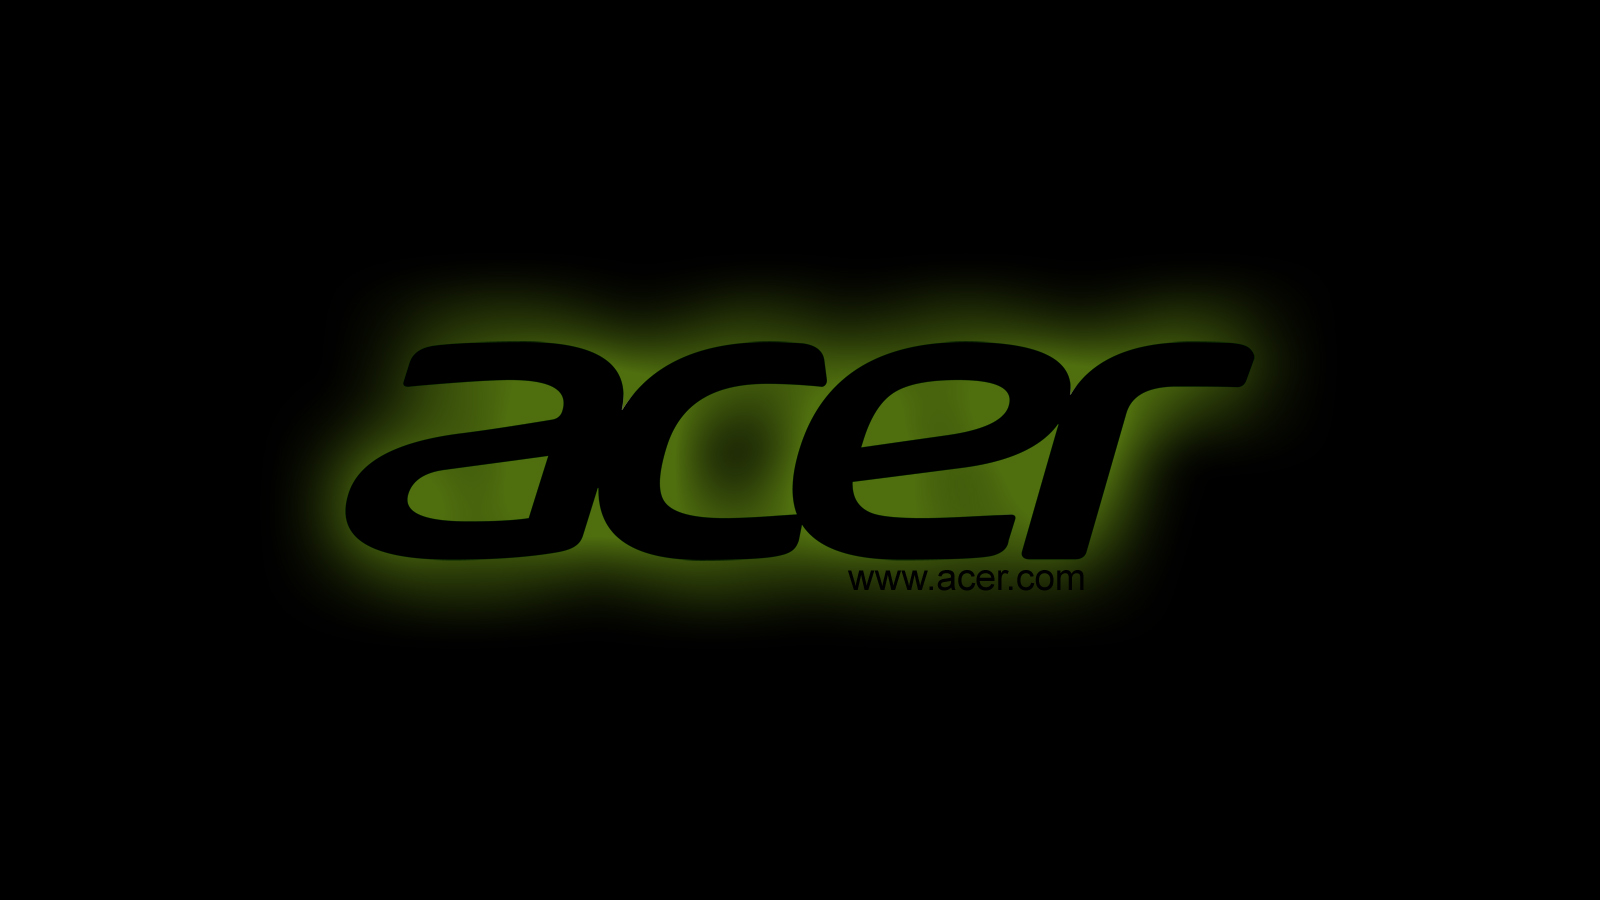 Acer Puter Wallpaper Desktop Background Id